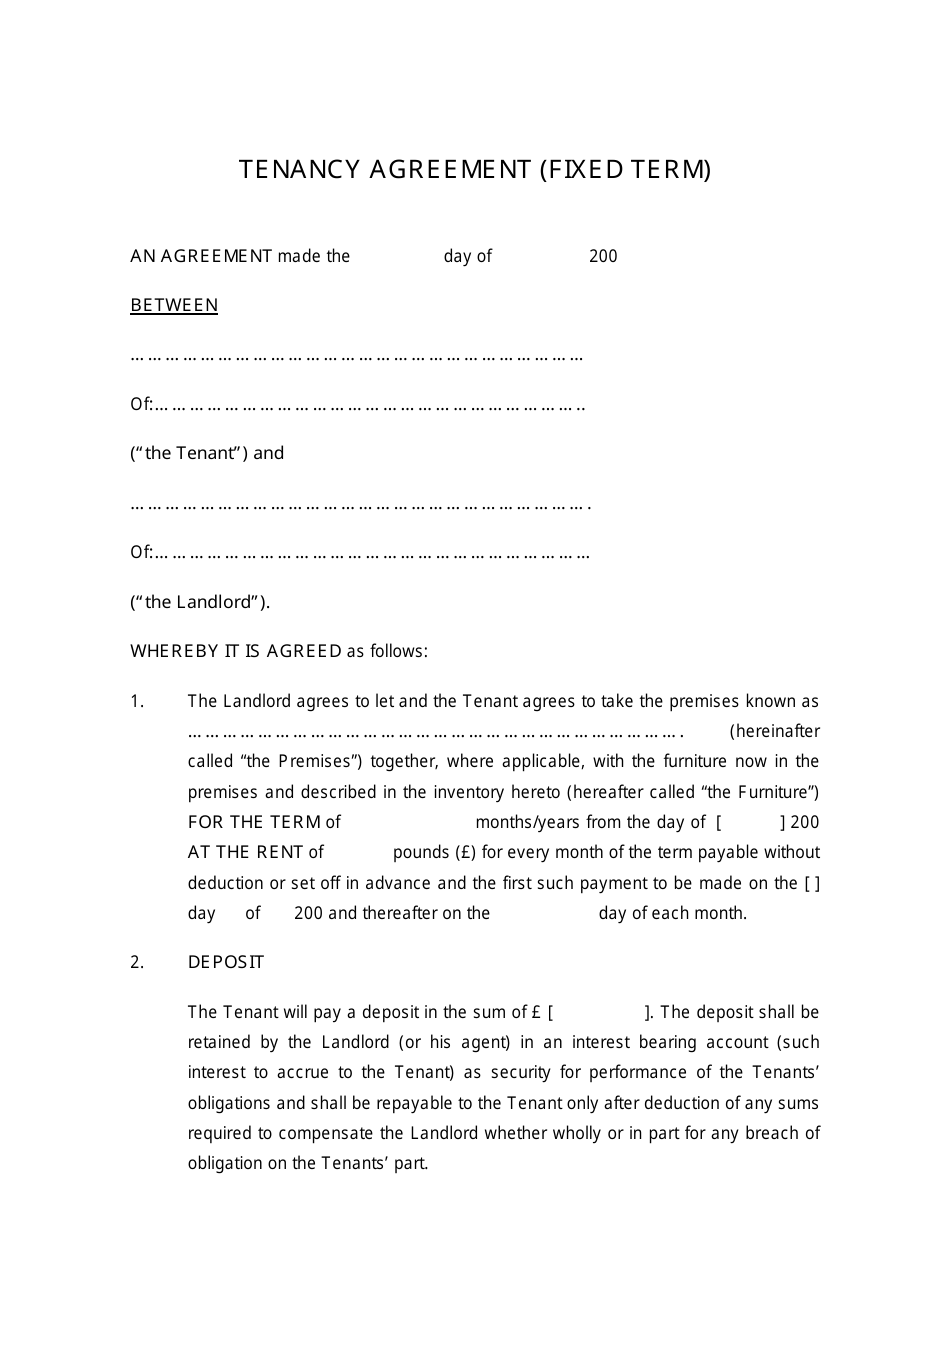 United Kingdom Tenancy Agreement Template (Fixed Term) Download Regarding fixed term tenancy agreement template